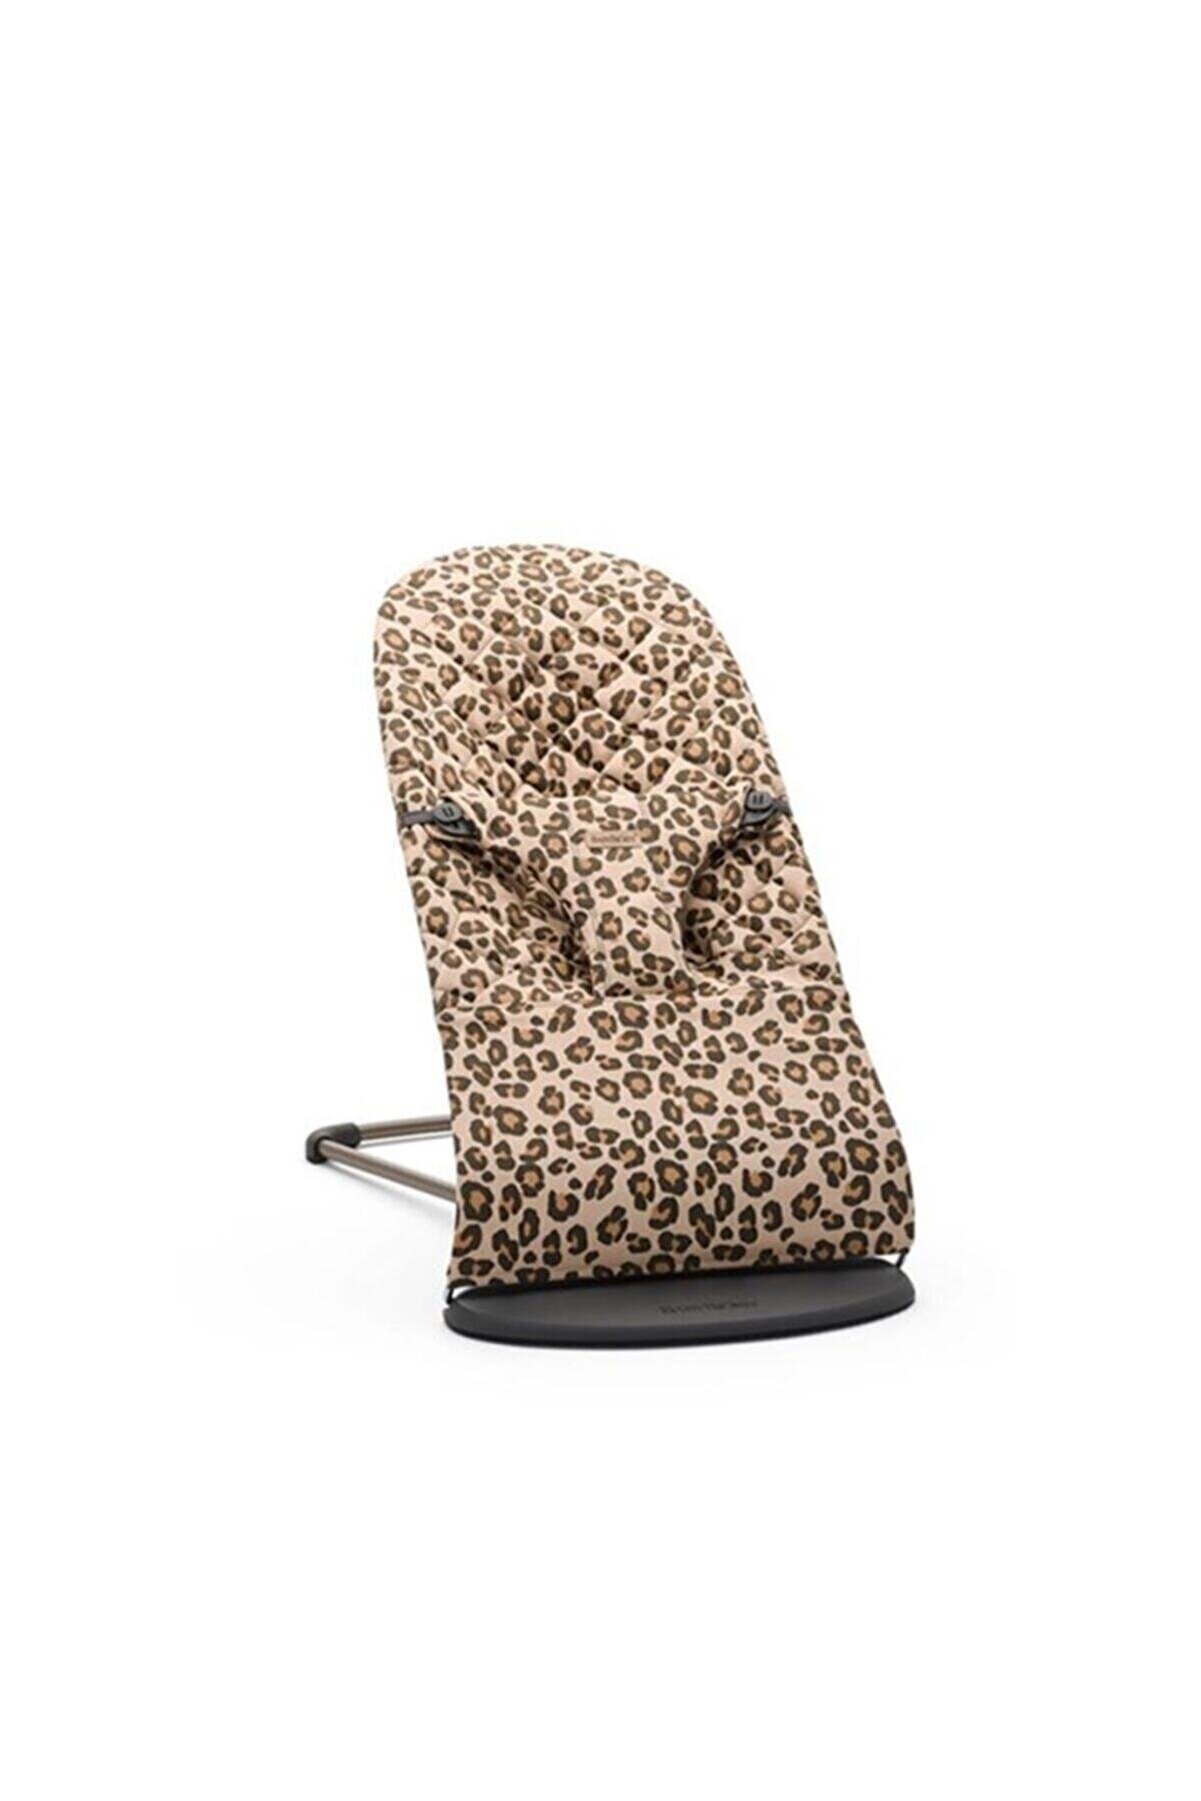 BabyBjörn Bliss Ana Kucağı Cotton Beige Leopard